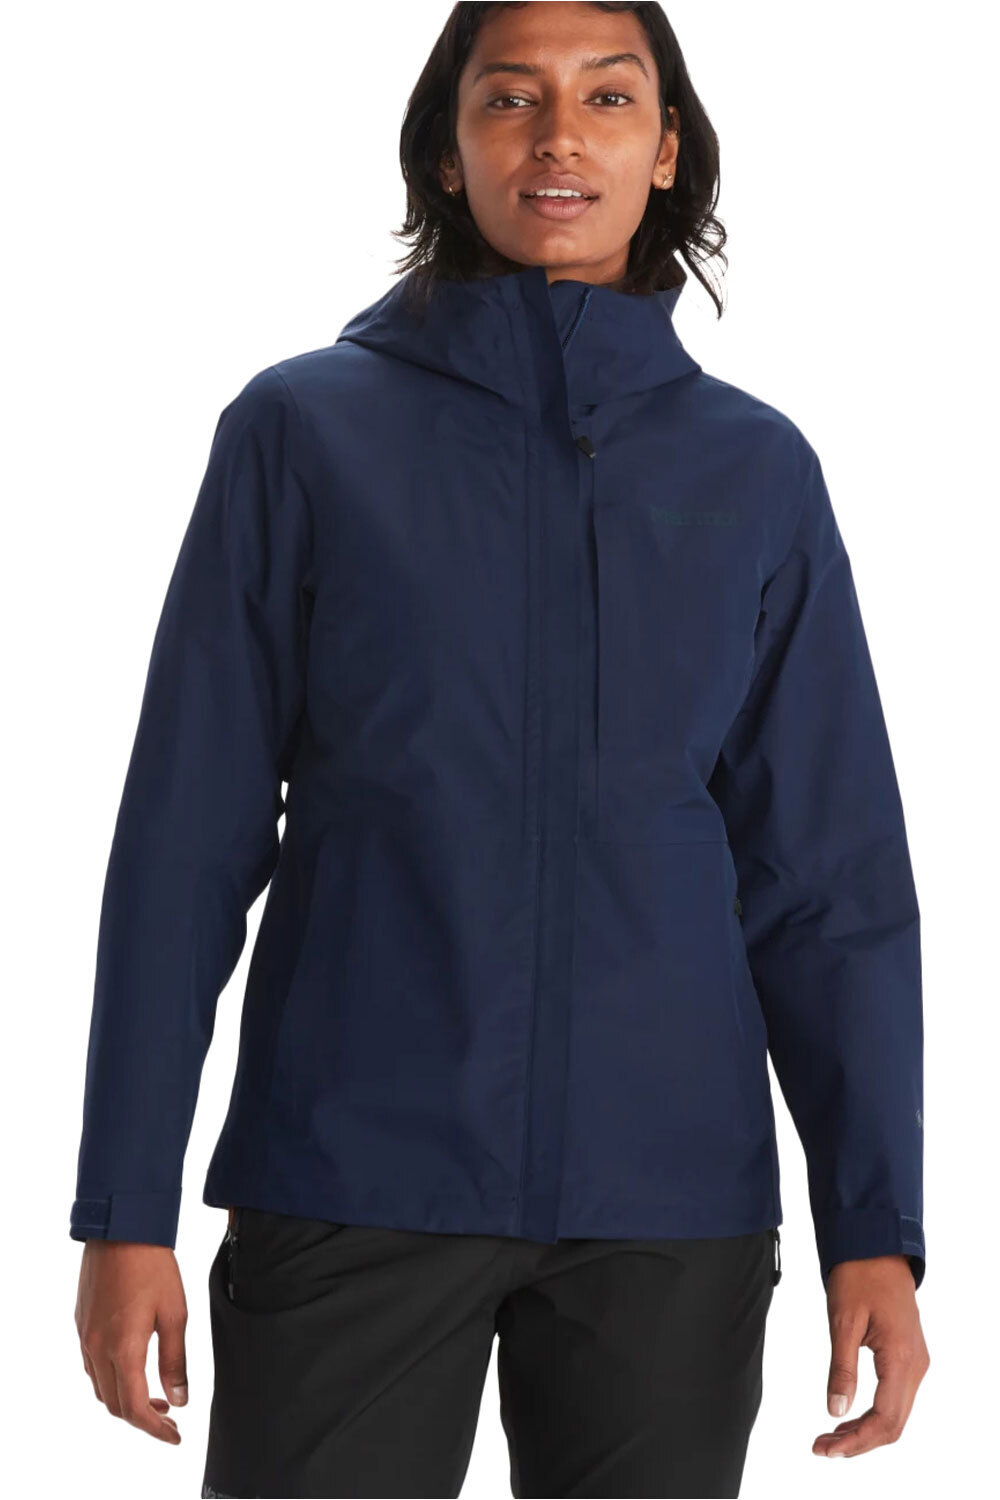 Marmot chaqueta impermeable mujer Wm's Minimalist GORE-TEX Jacket vista frontal